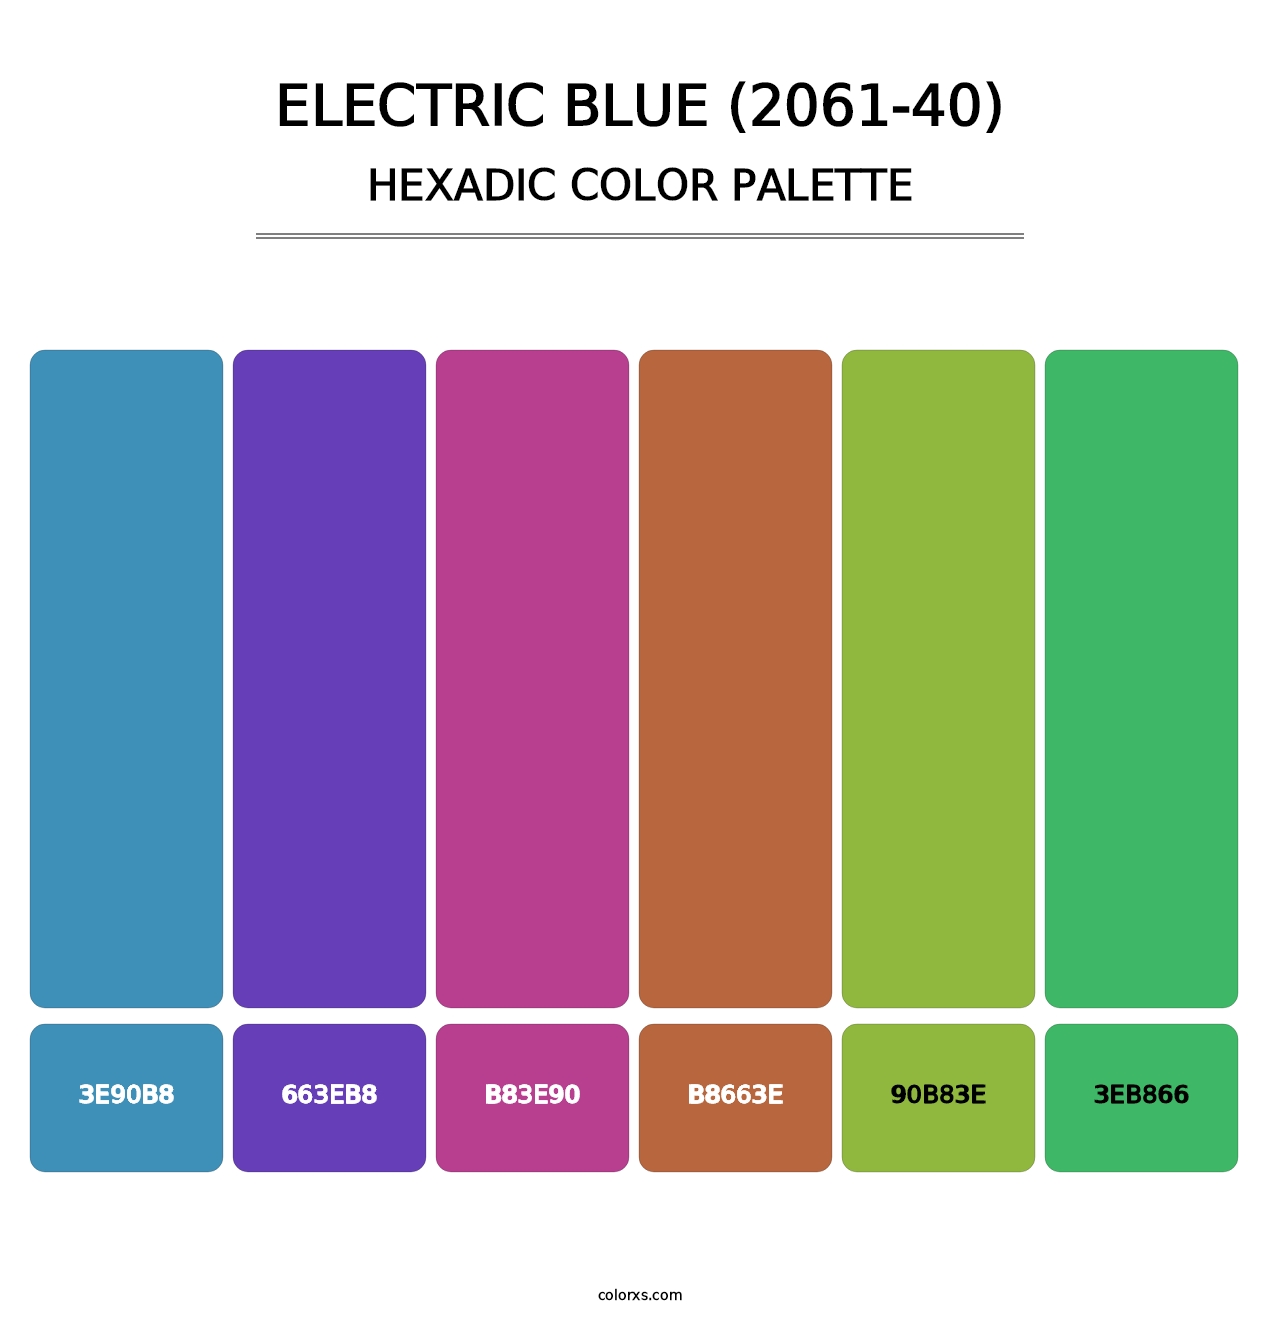 Electric Blue (2061-40) - Hexadic Color Palette